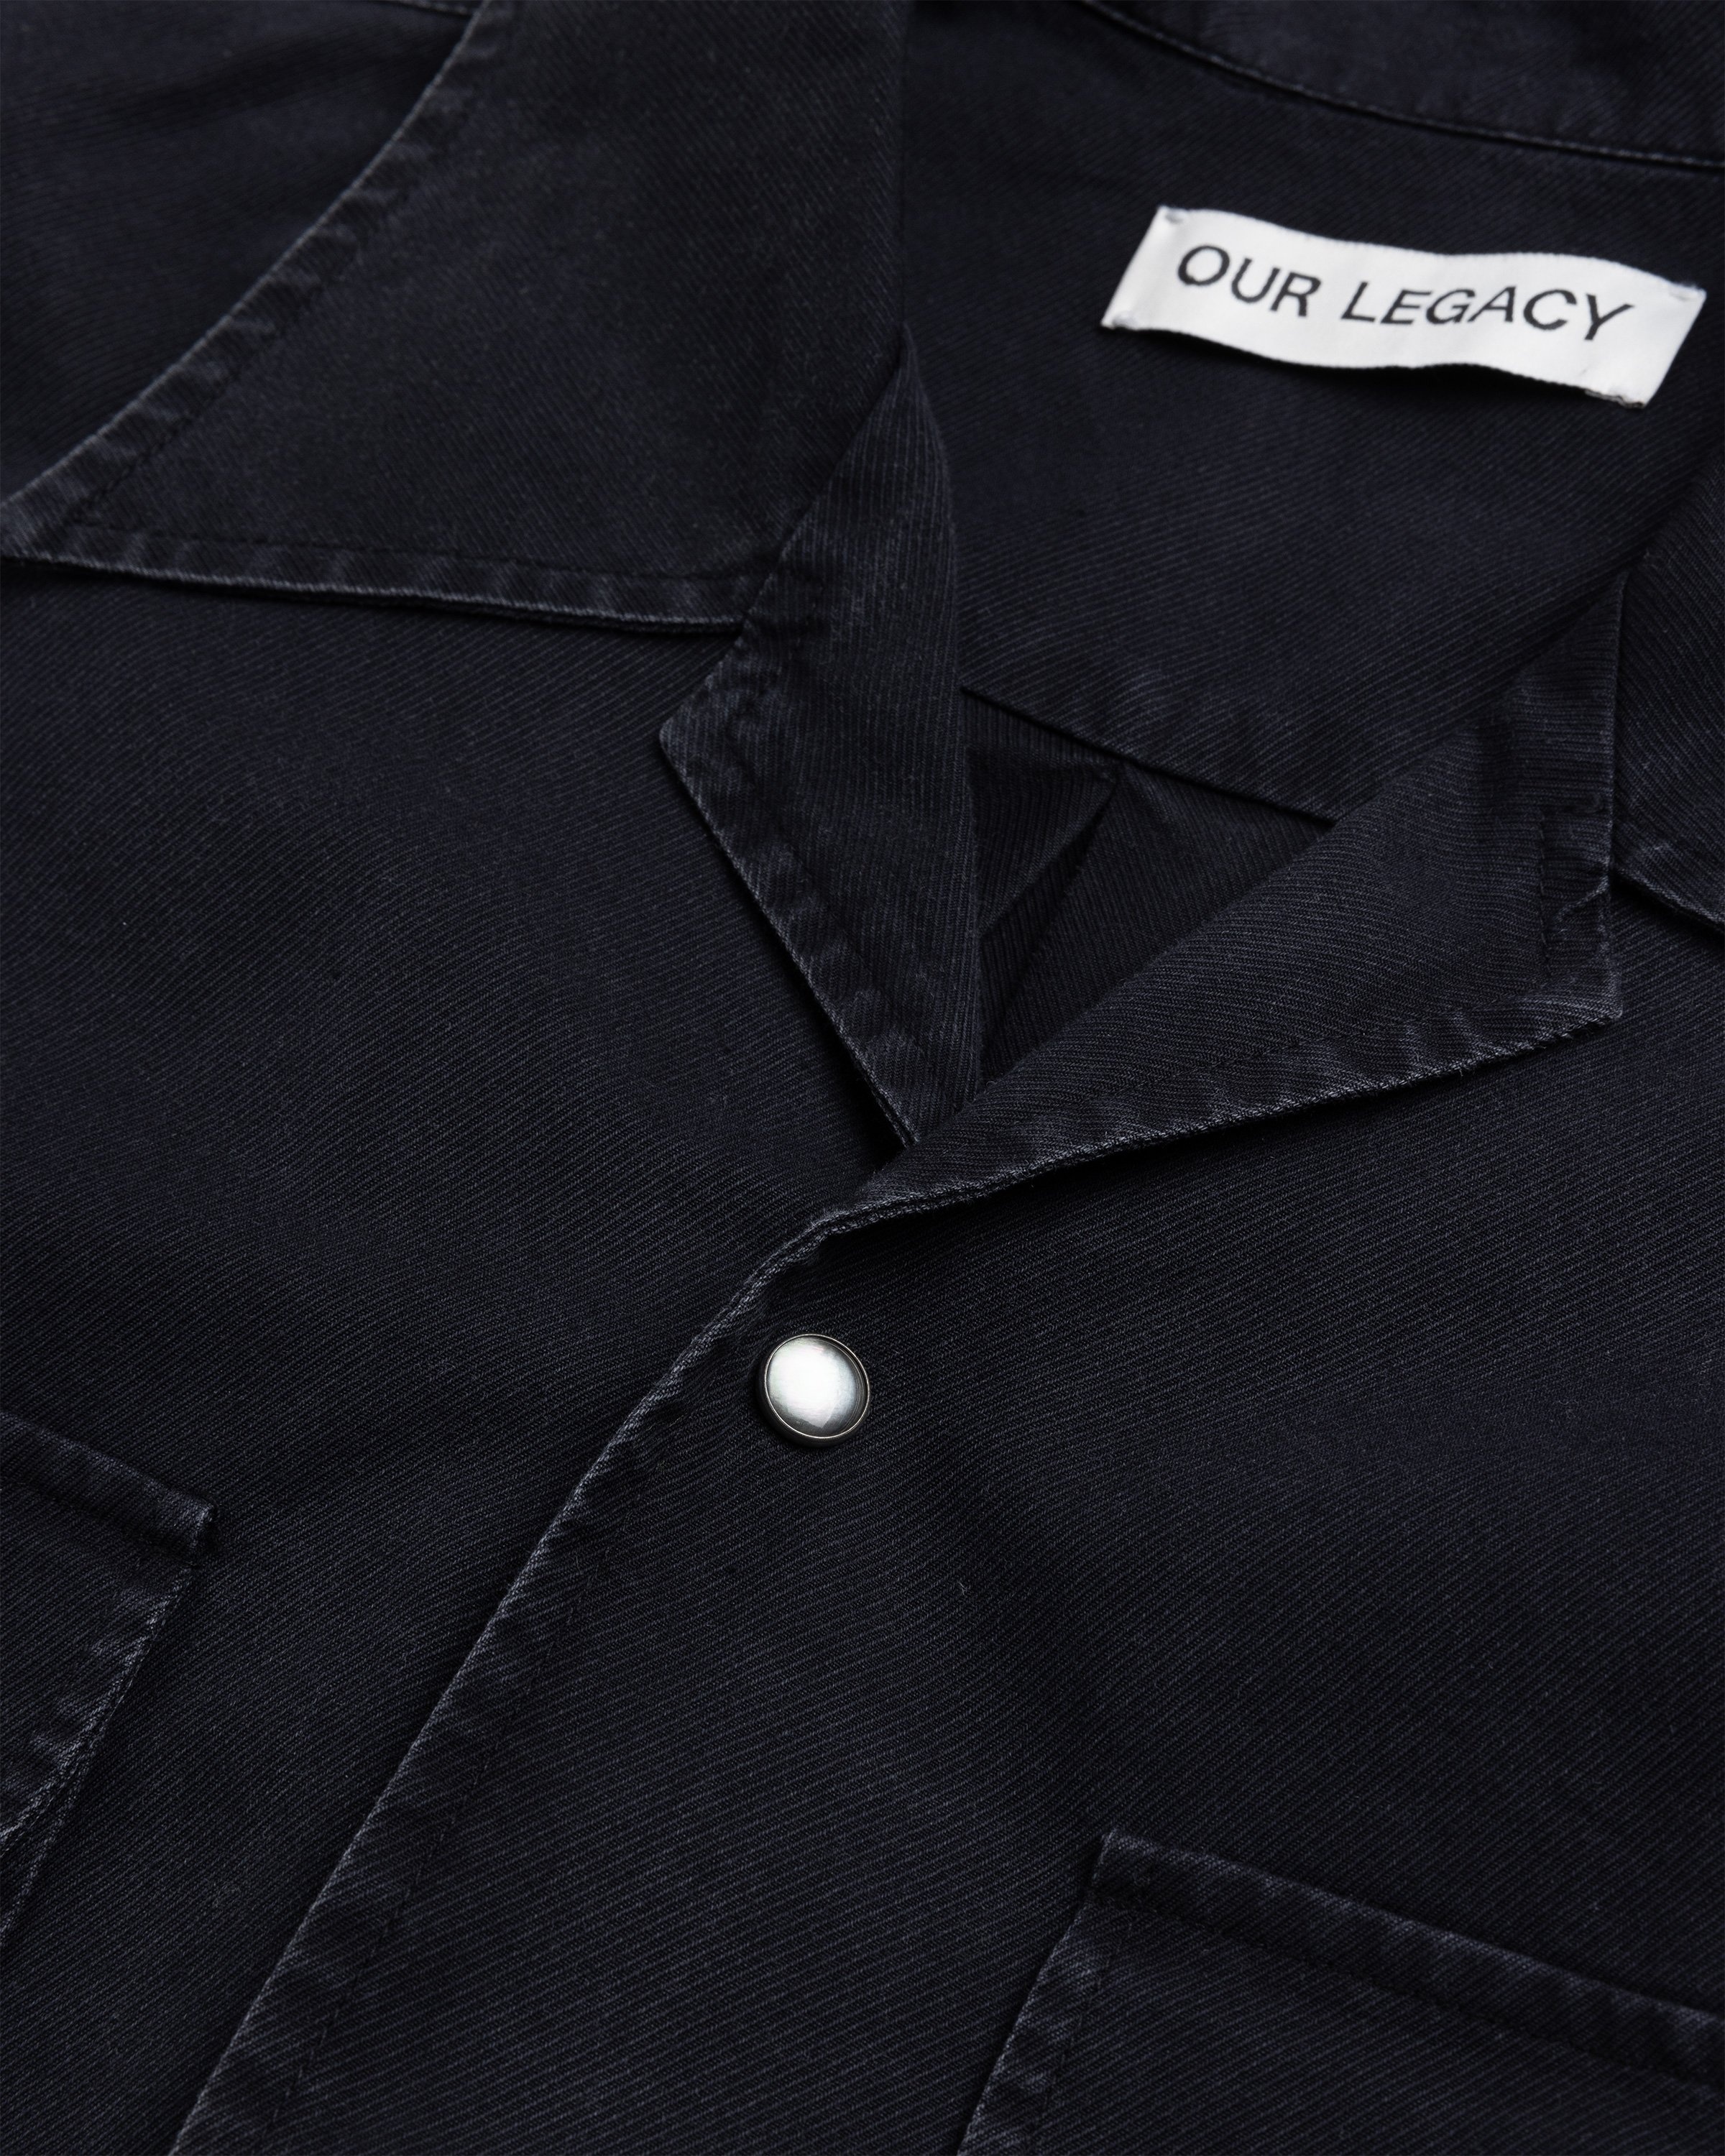 Our Legacy – Poco Shirt Black Cosmic Twill - Shirts - Black - Image 5